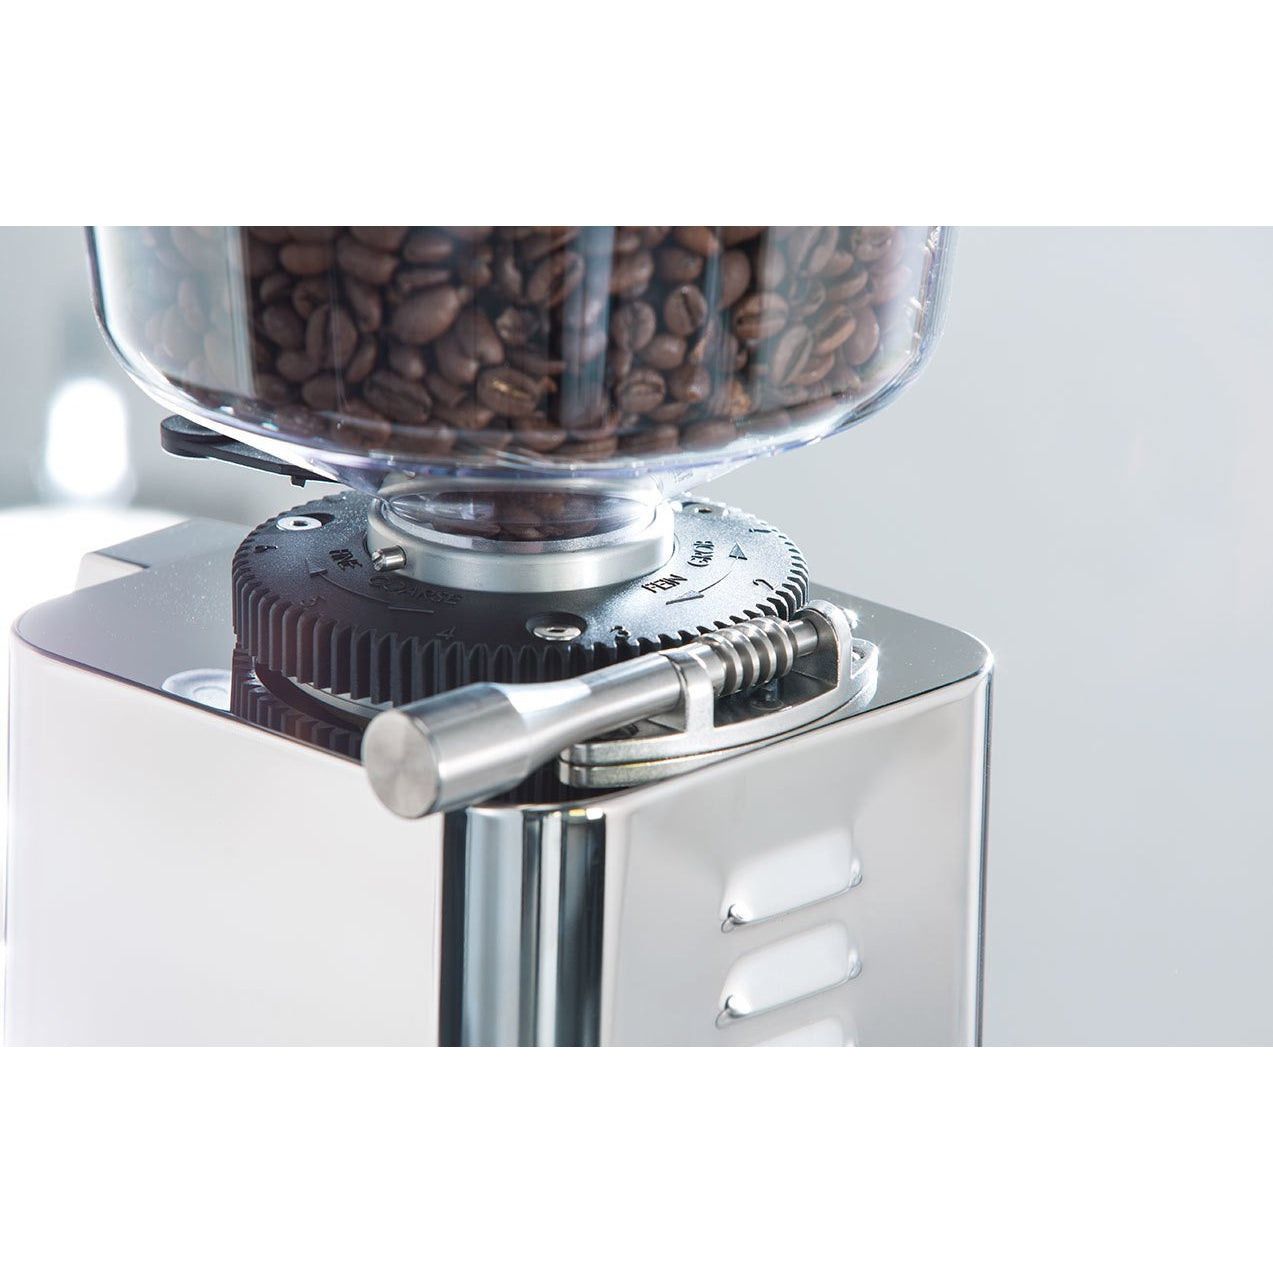 ECM S-Manuale 64 Coffee Grinder